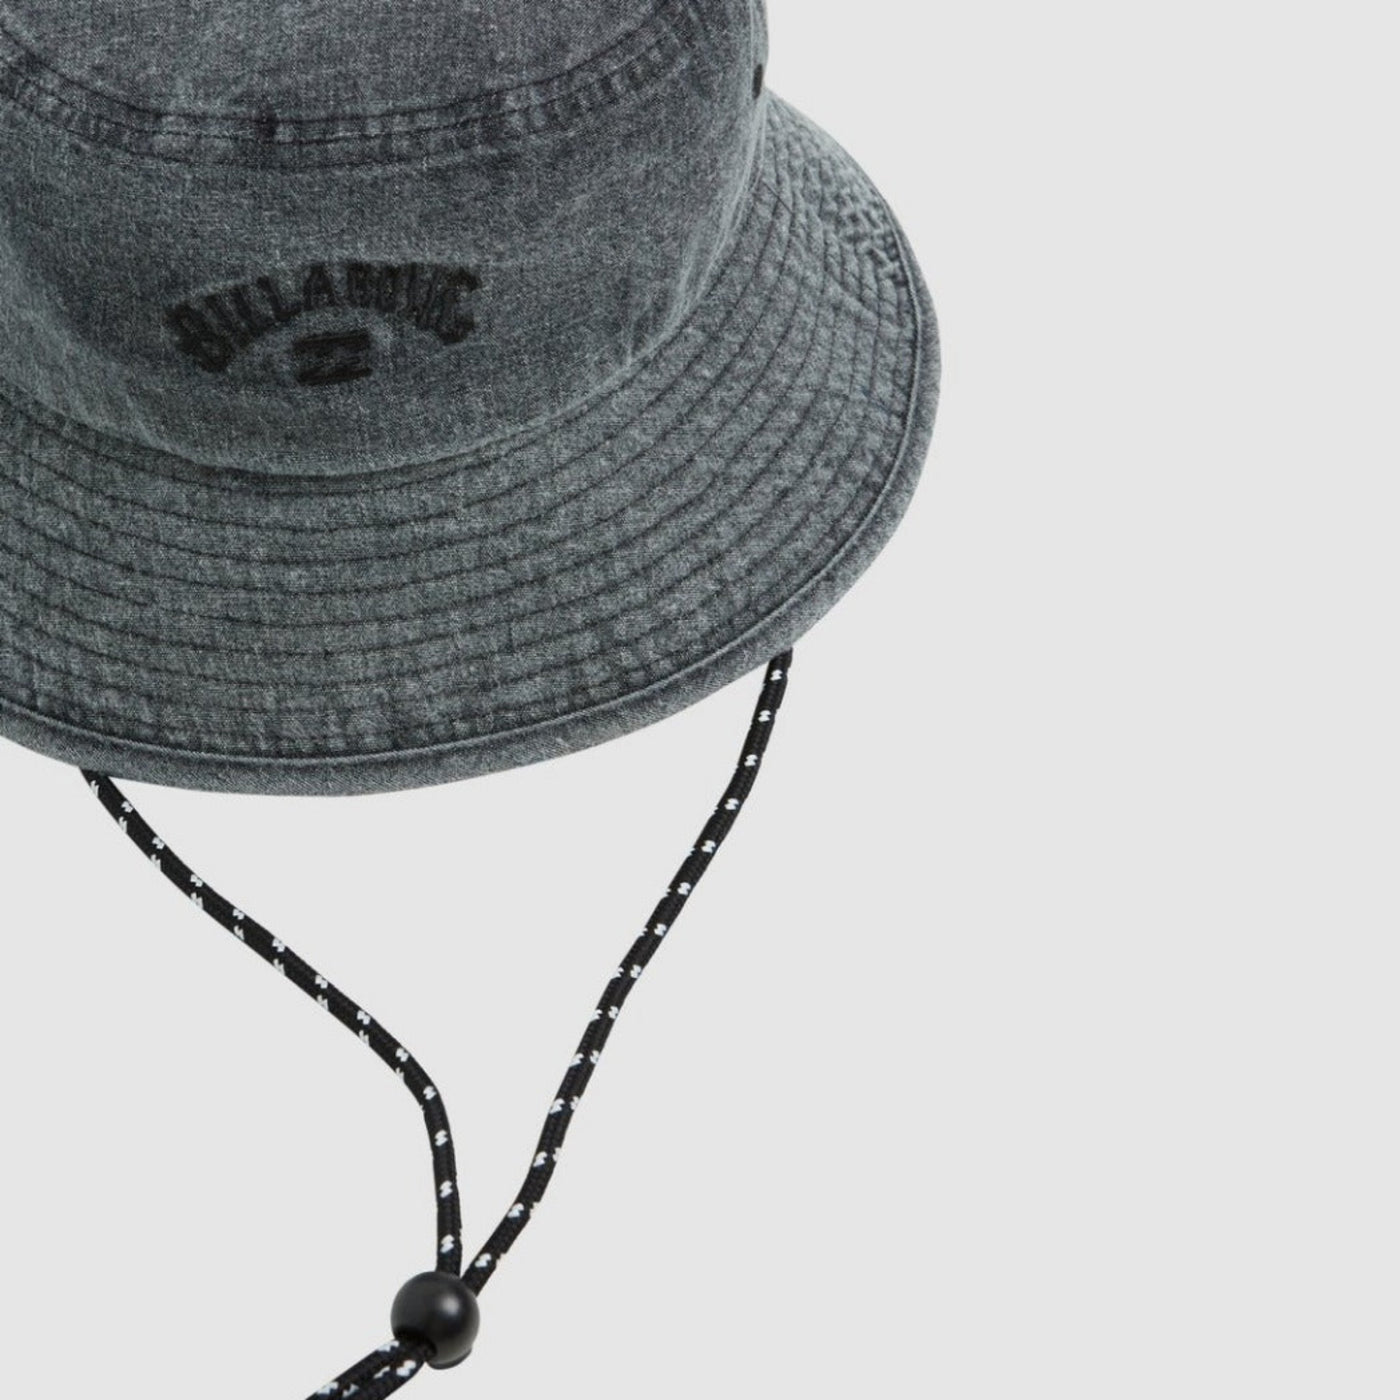 Billabong Men's Peyote Washed Hat - Washed Black